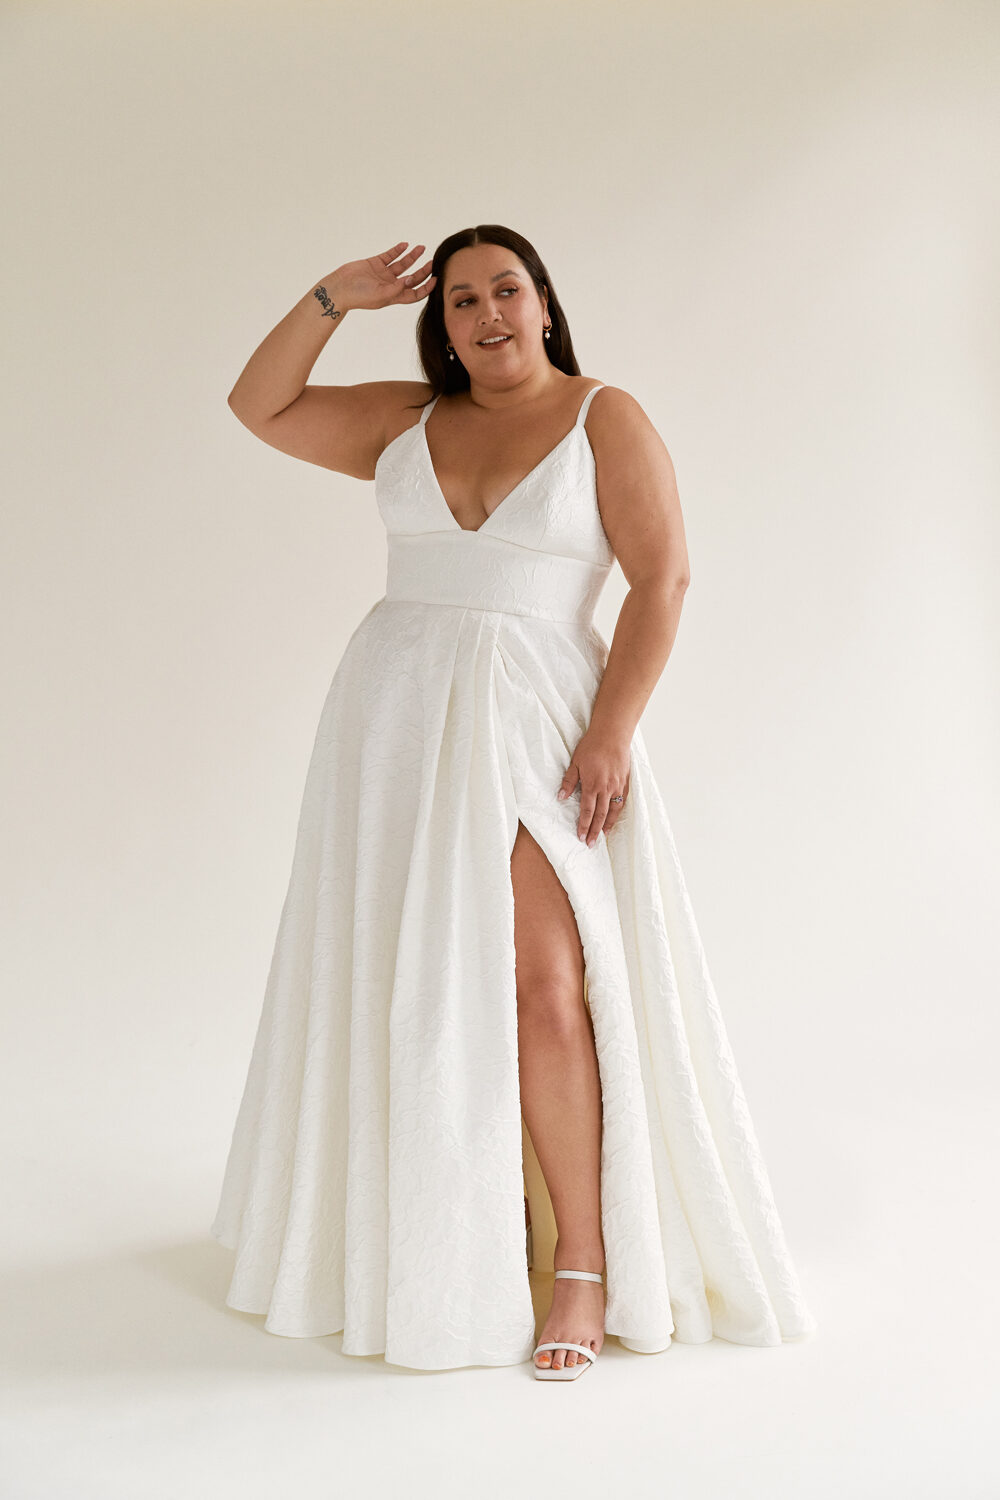 Georgia by Truvelle Bridal Leg Slit Thick Waistband Wedding Dress A-line skirt Canadian bridal designer